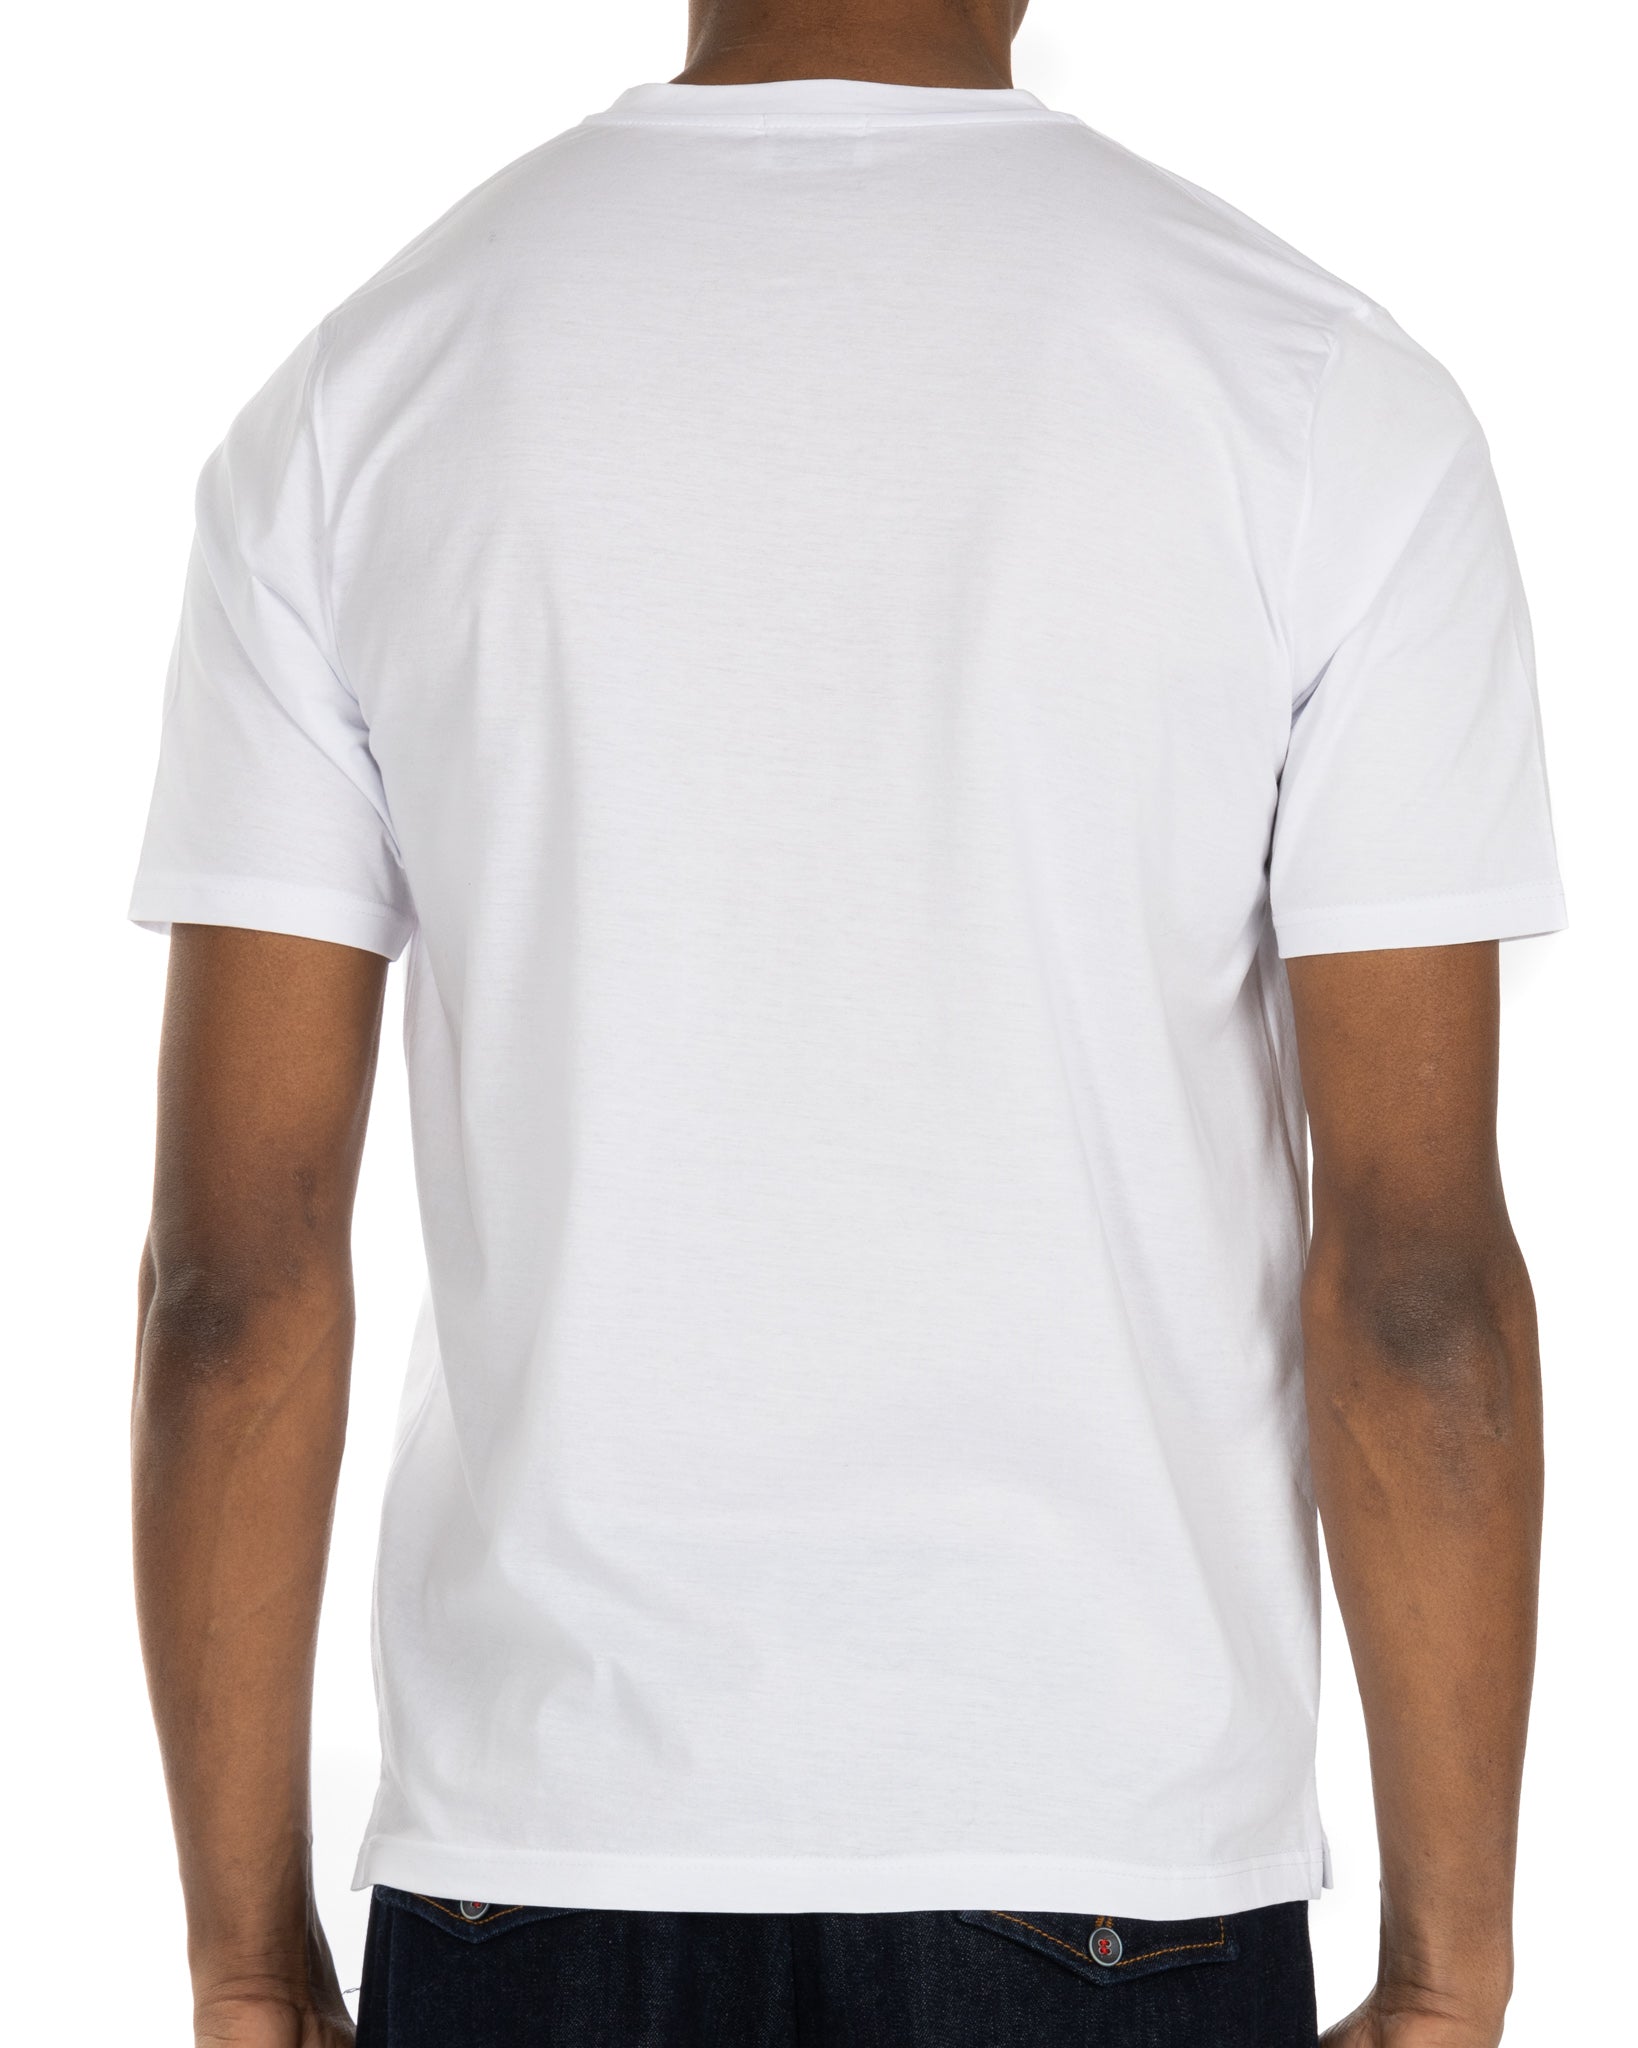 Glasgow - white lisle t-shirt